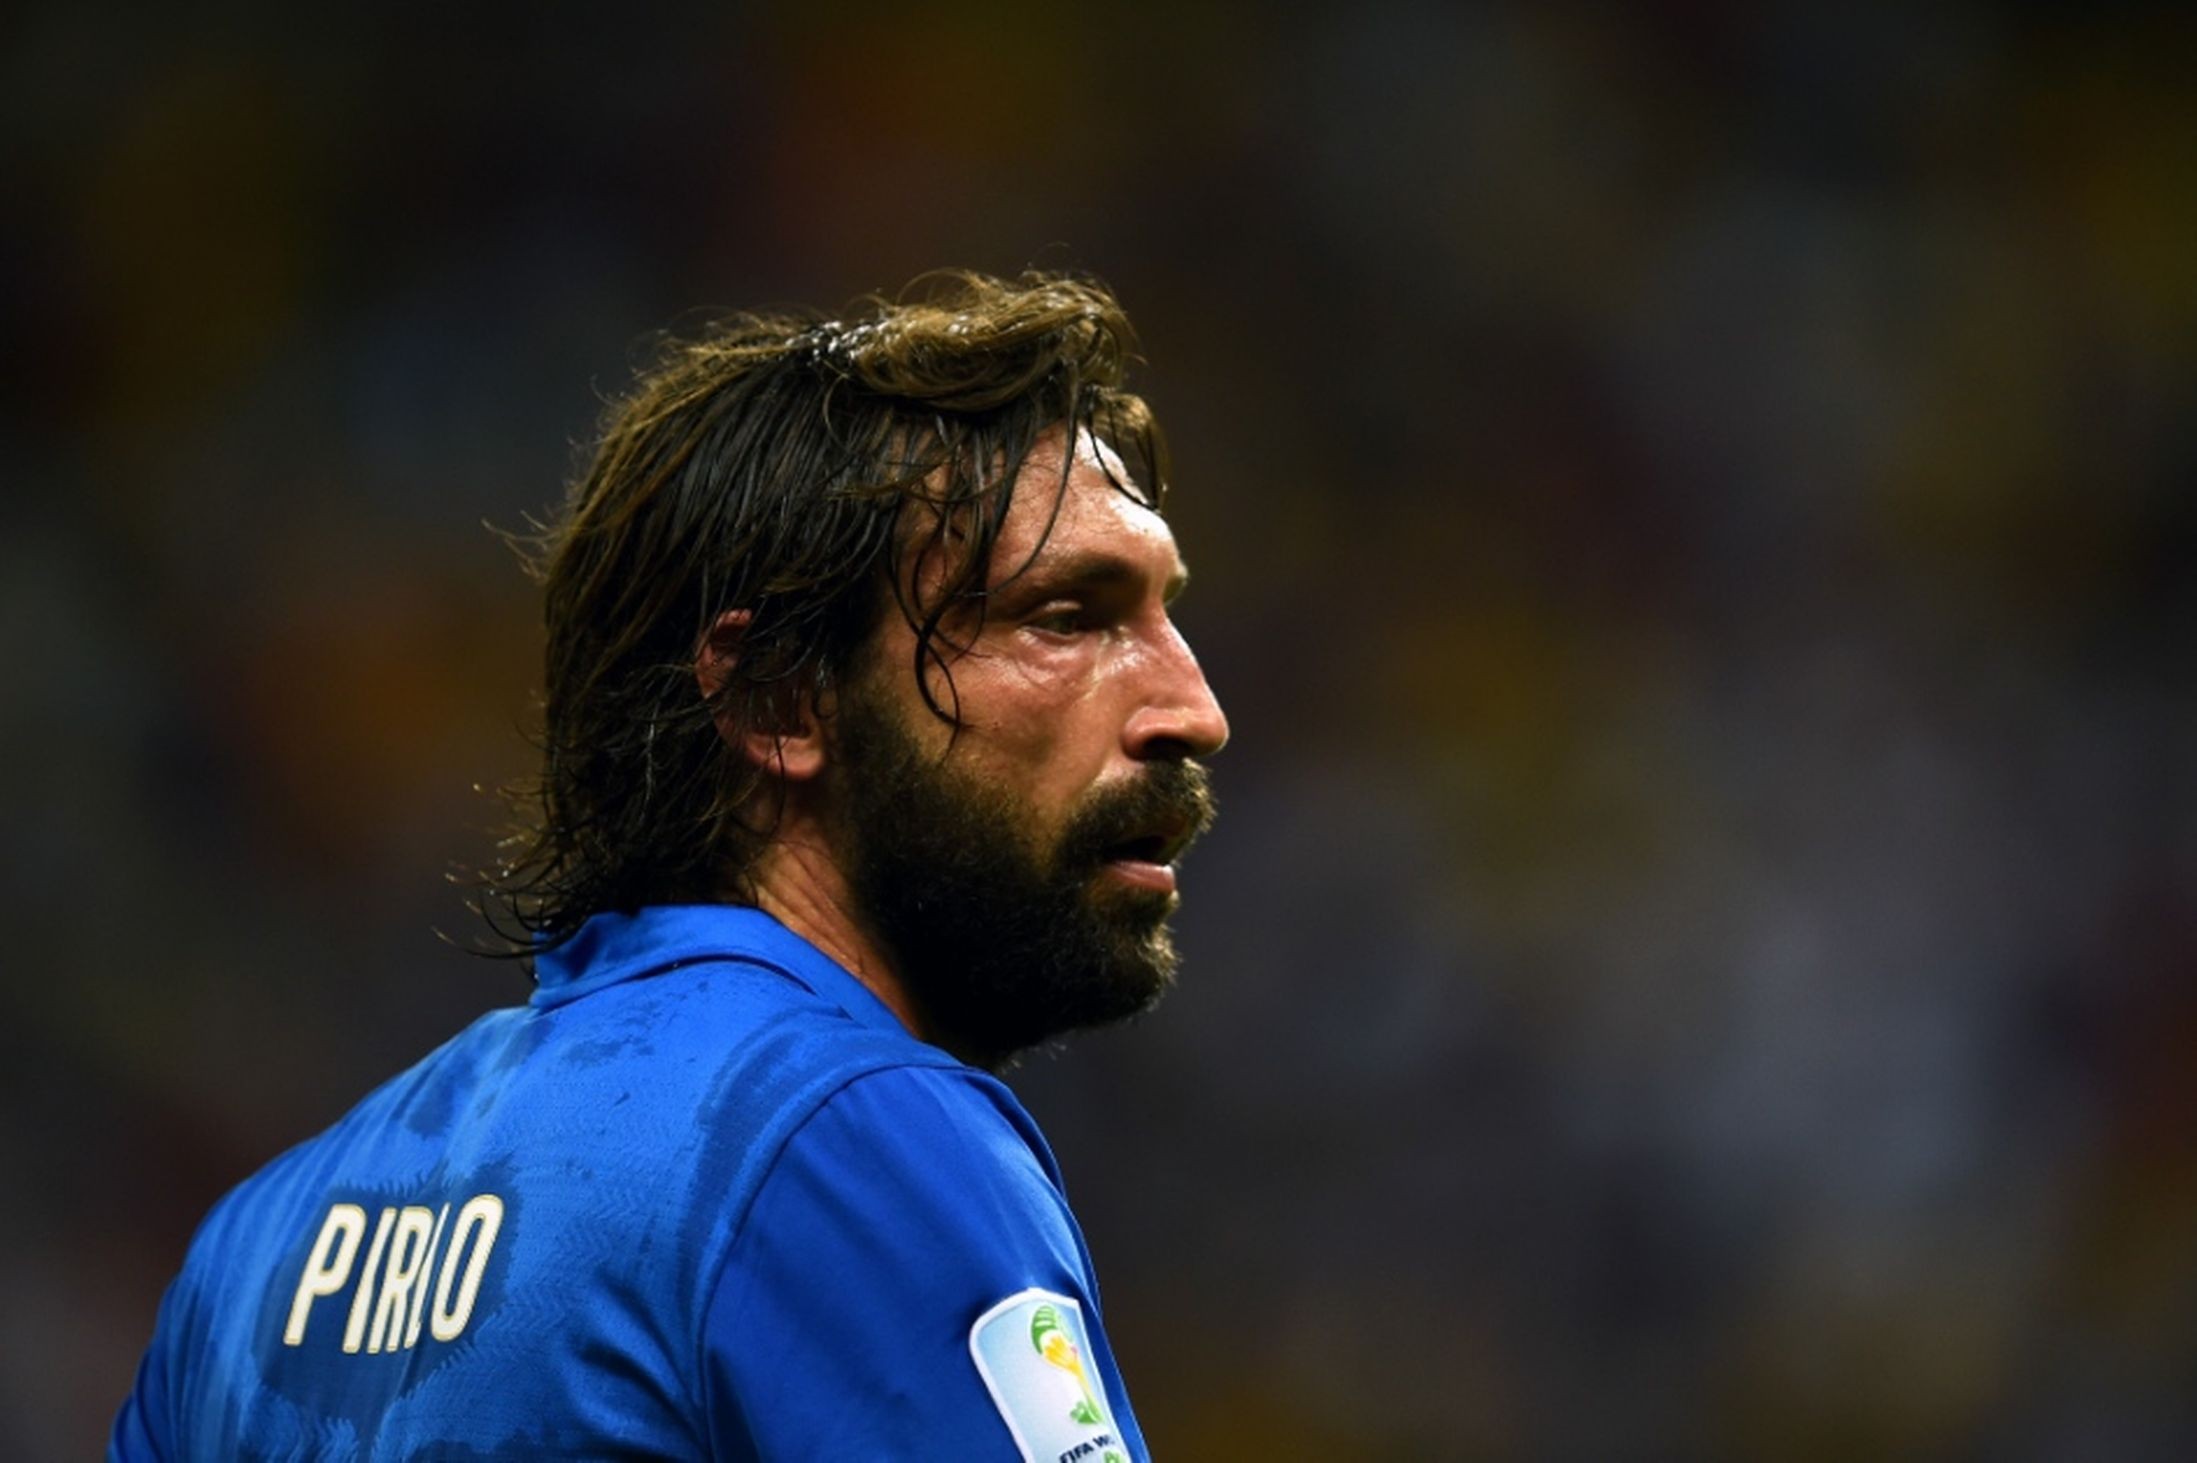 People 2197x1463 footballers soccer men sport beard Andrea Pirlo closeup